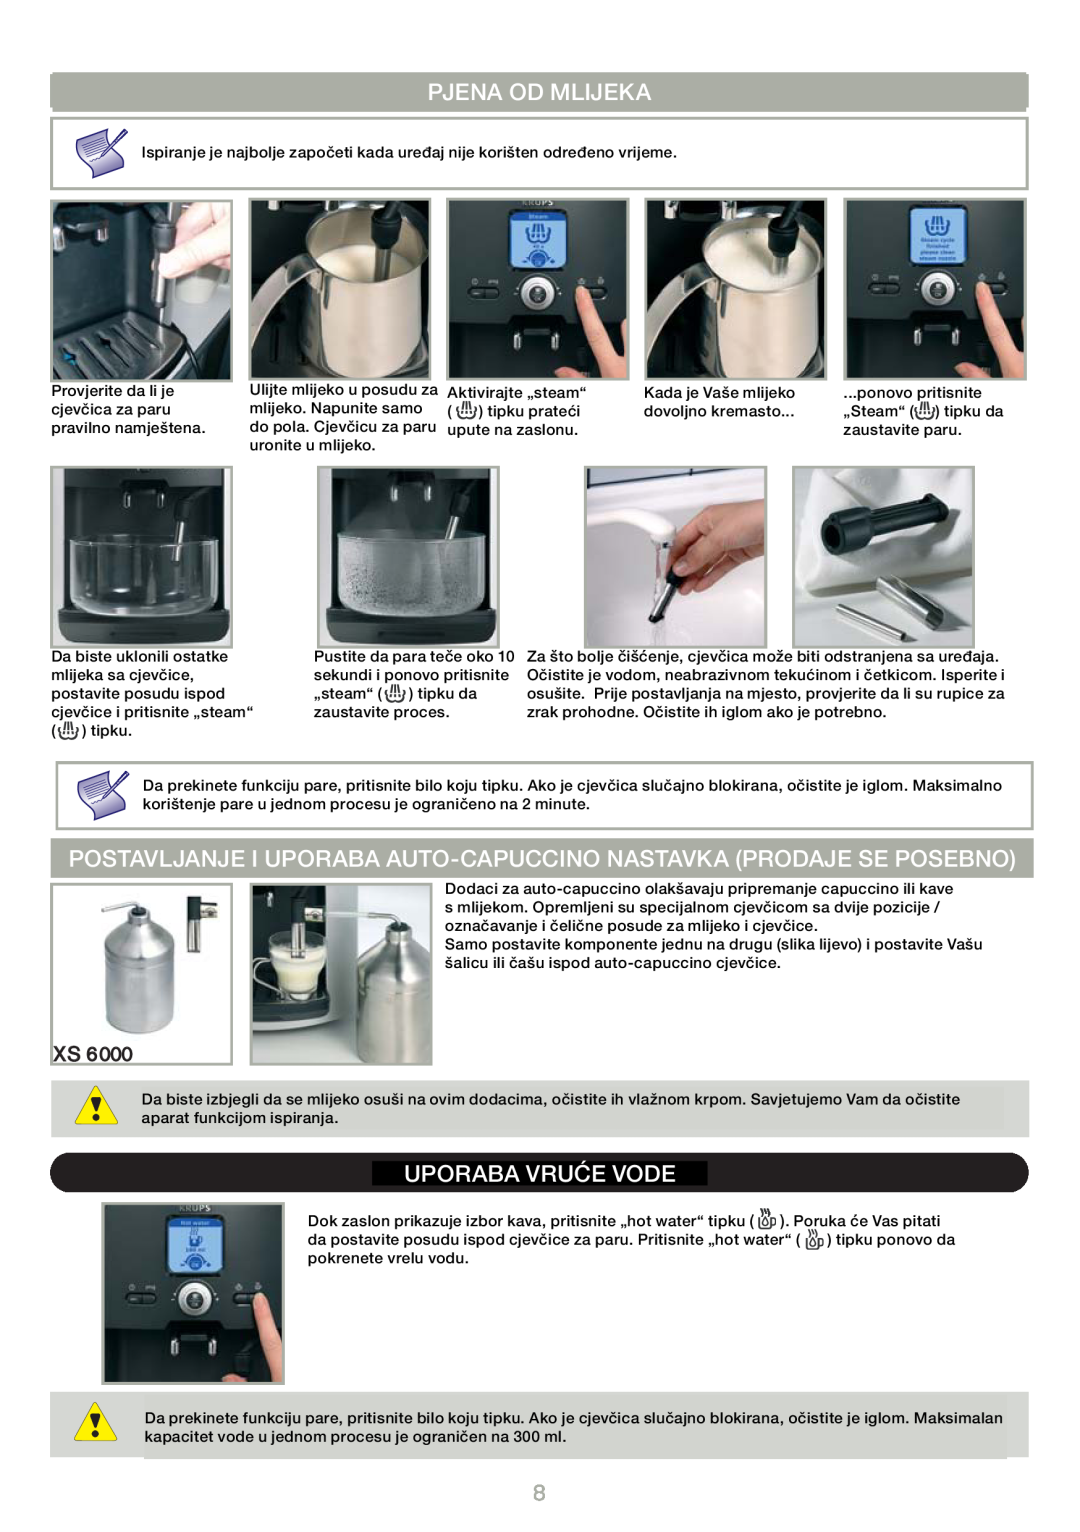 Krups EA 8025, EA 8050 manual Pjenafrothingod Mlijekamilk, Uporaba Vruće Vode 